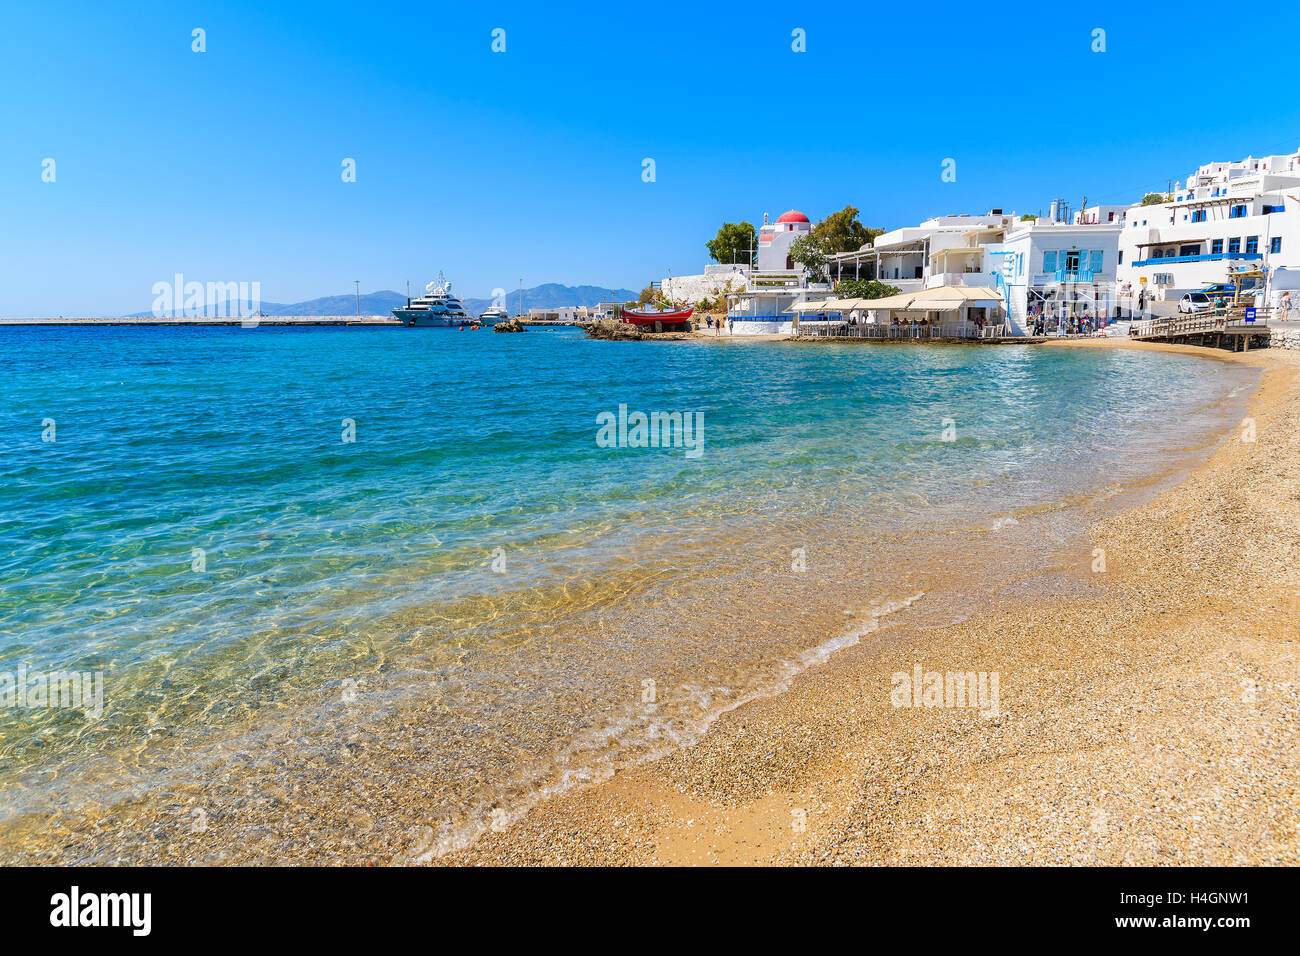 View of beautiful beach in Mykonos town, Greece Stock Photo